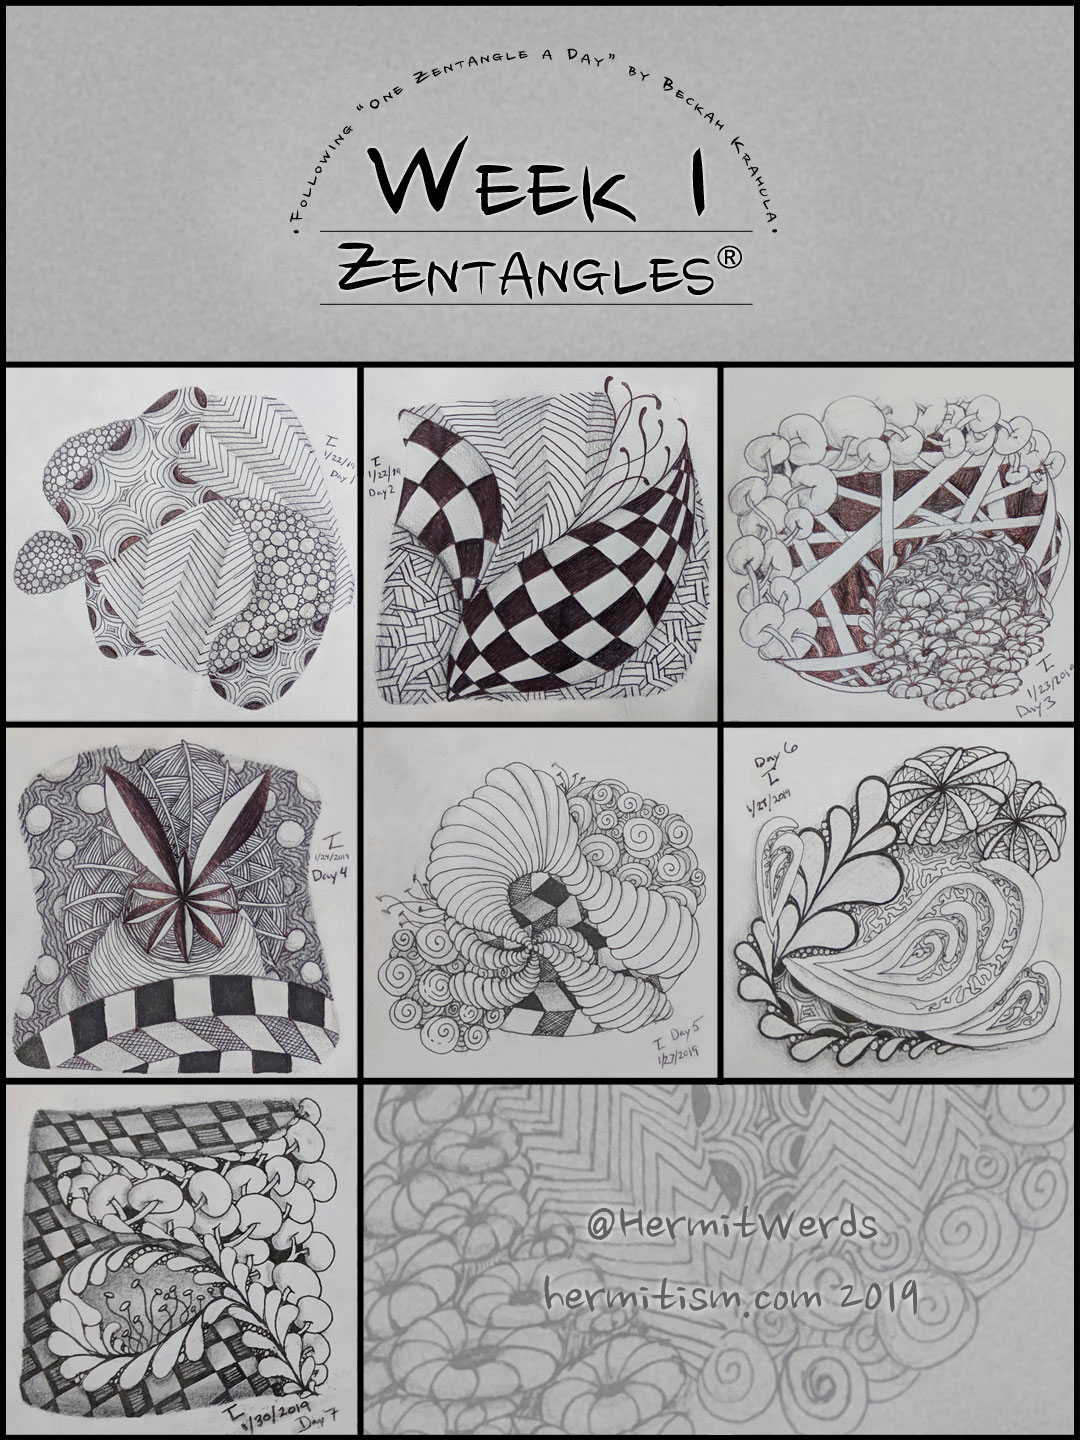 Week 1 Zentangles by Hermit Werds for Pinterest